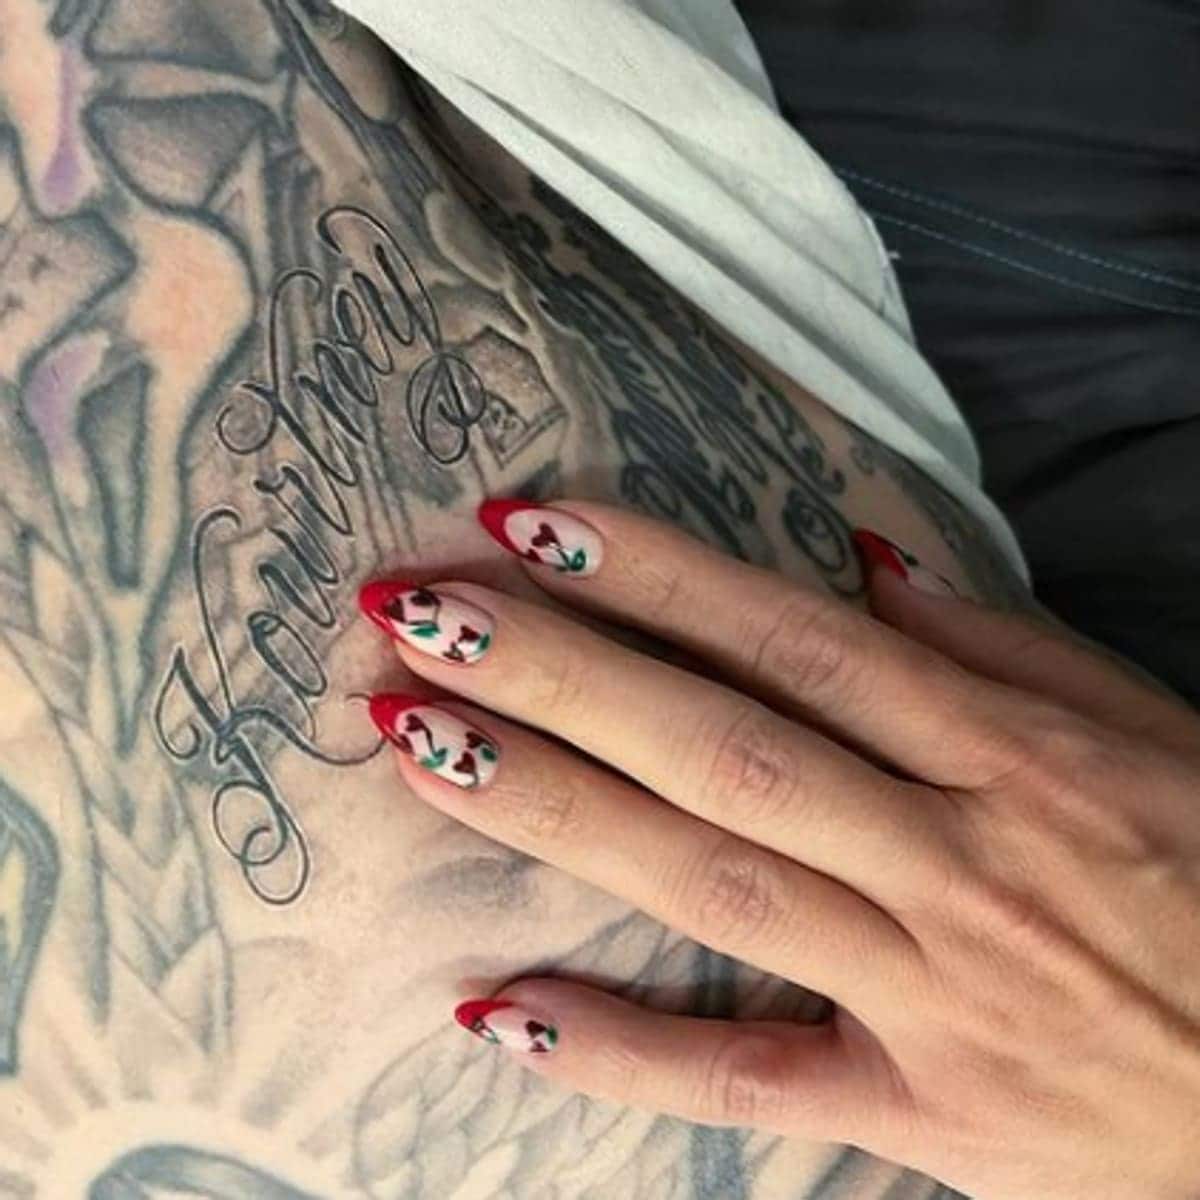 Travis Barker Kourtney Kardashian tattoo